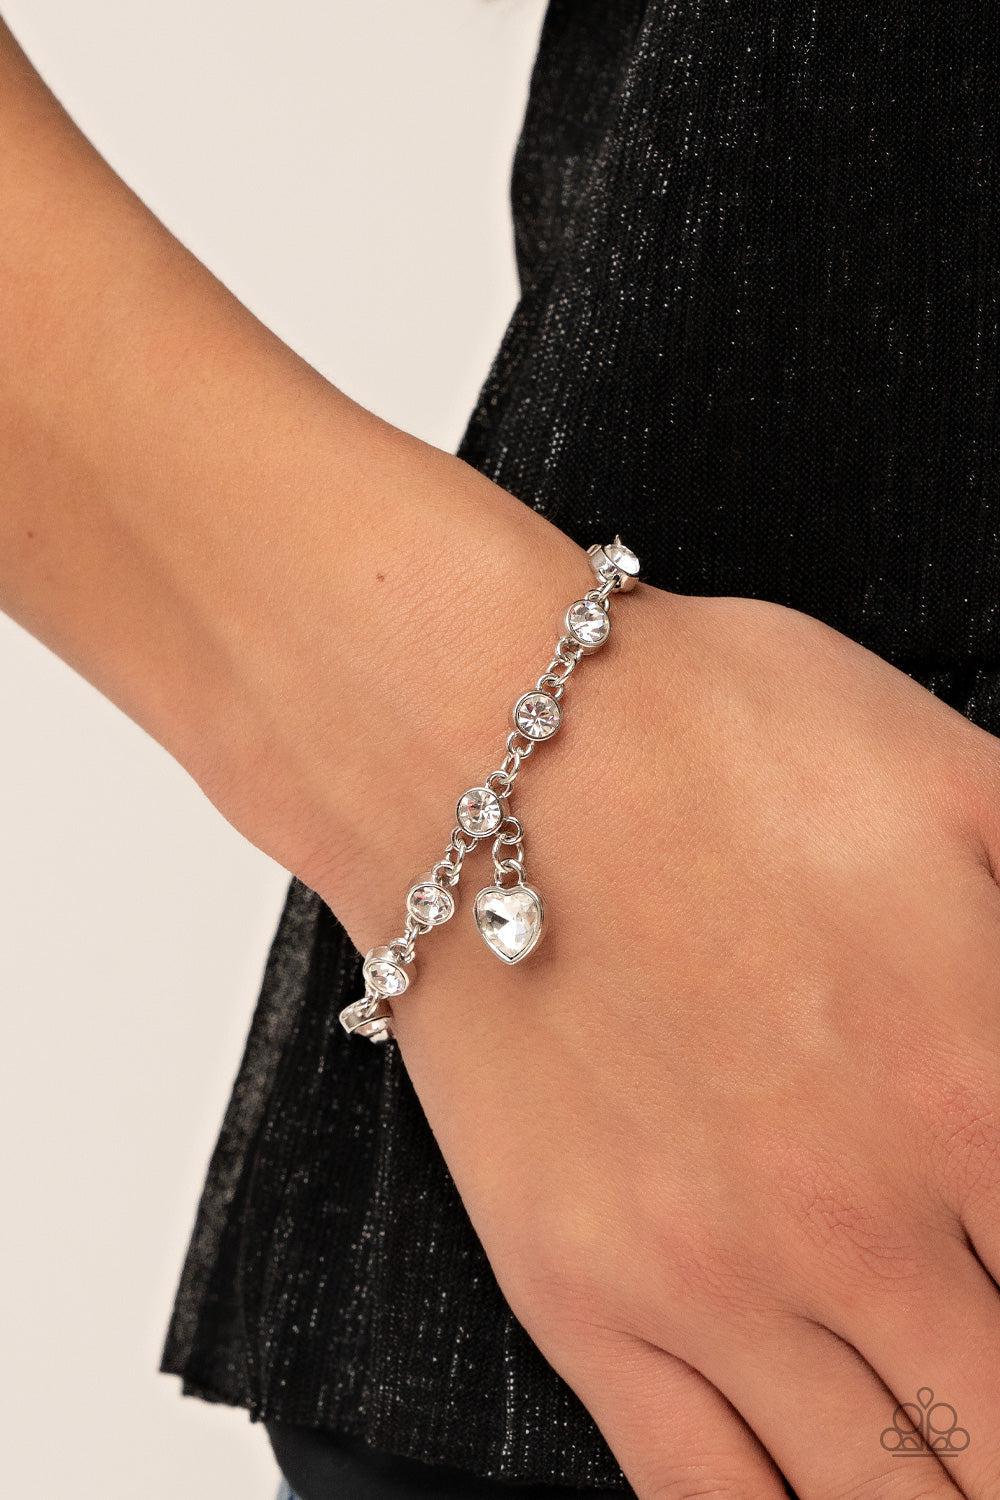 Truly Lovely White Rhinestone Heart Charm Bracelet - Paparazzi Accessories- lightbox - CarasShop.com - $5 Jewelry by Cara Jewels